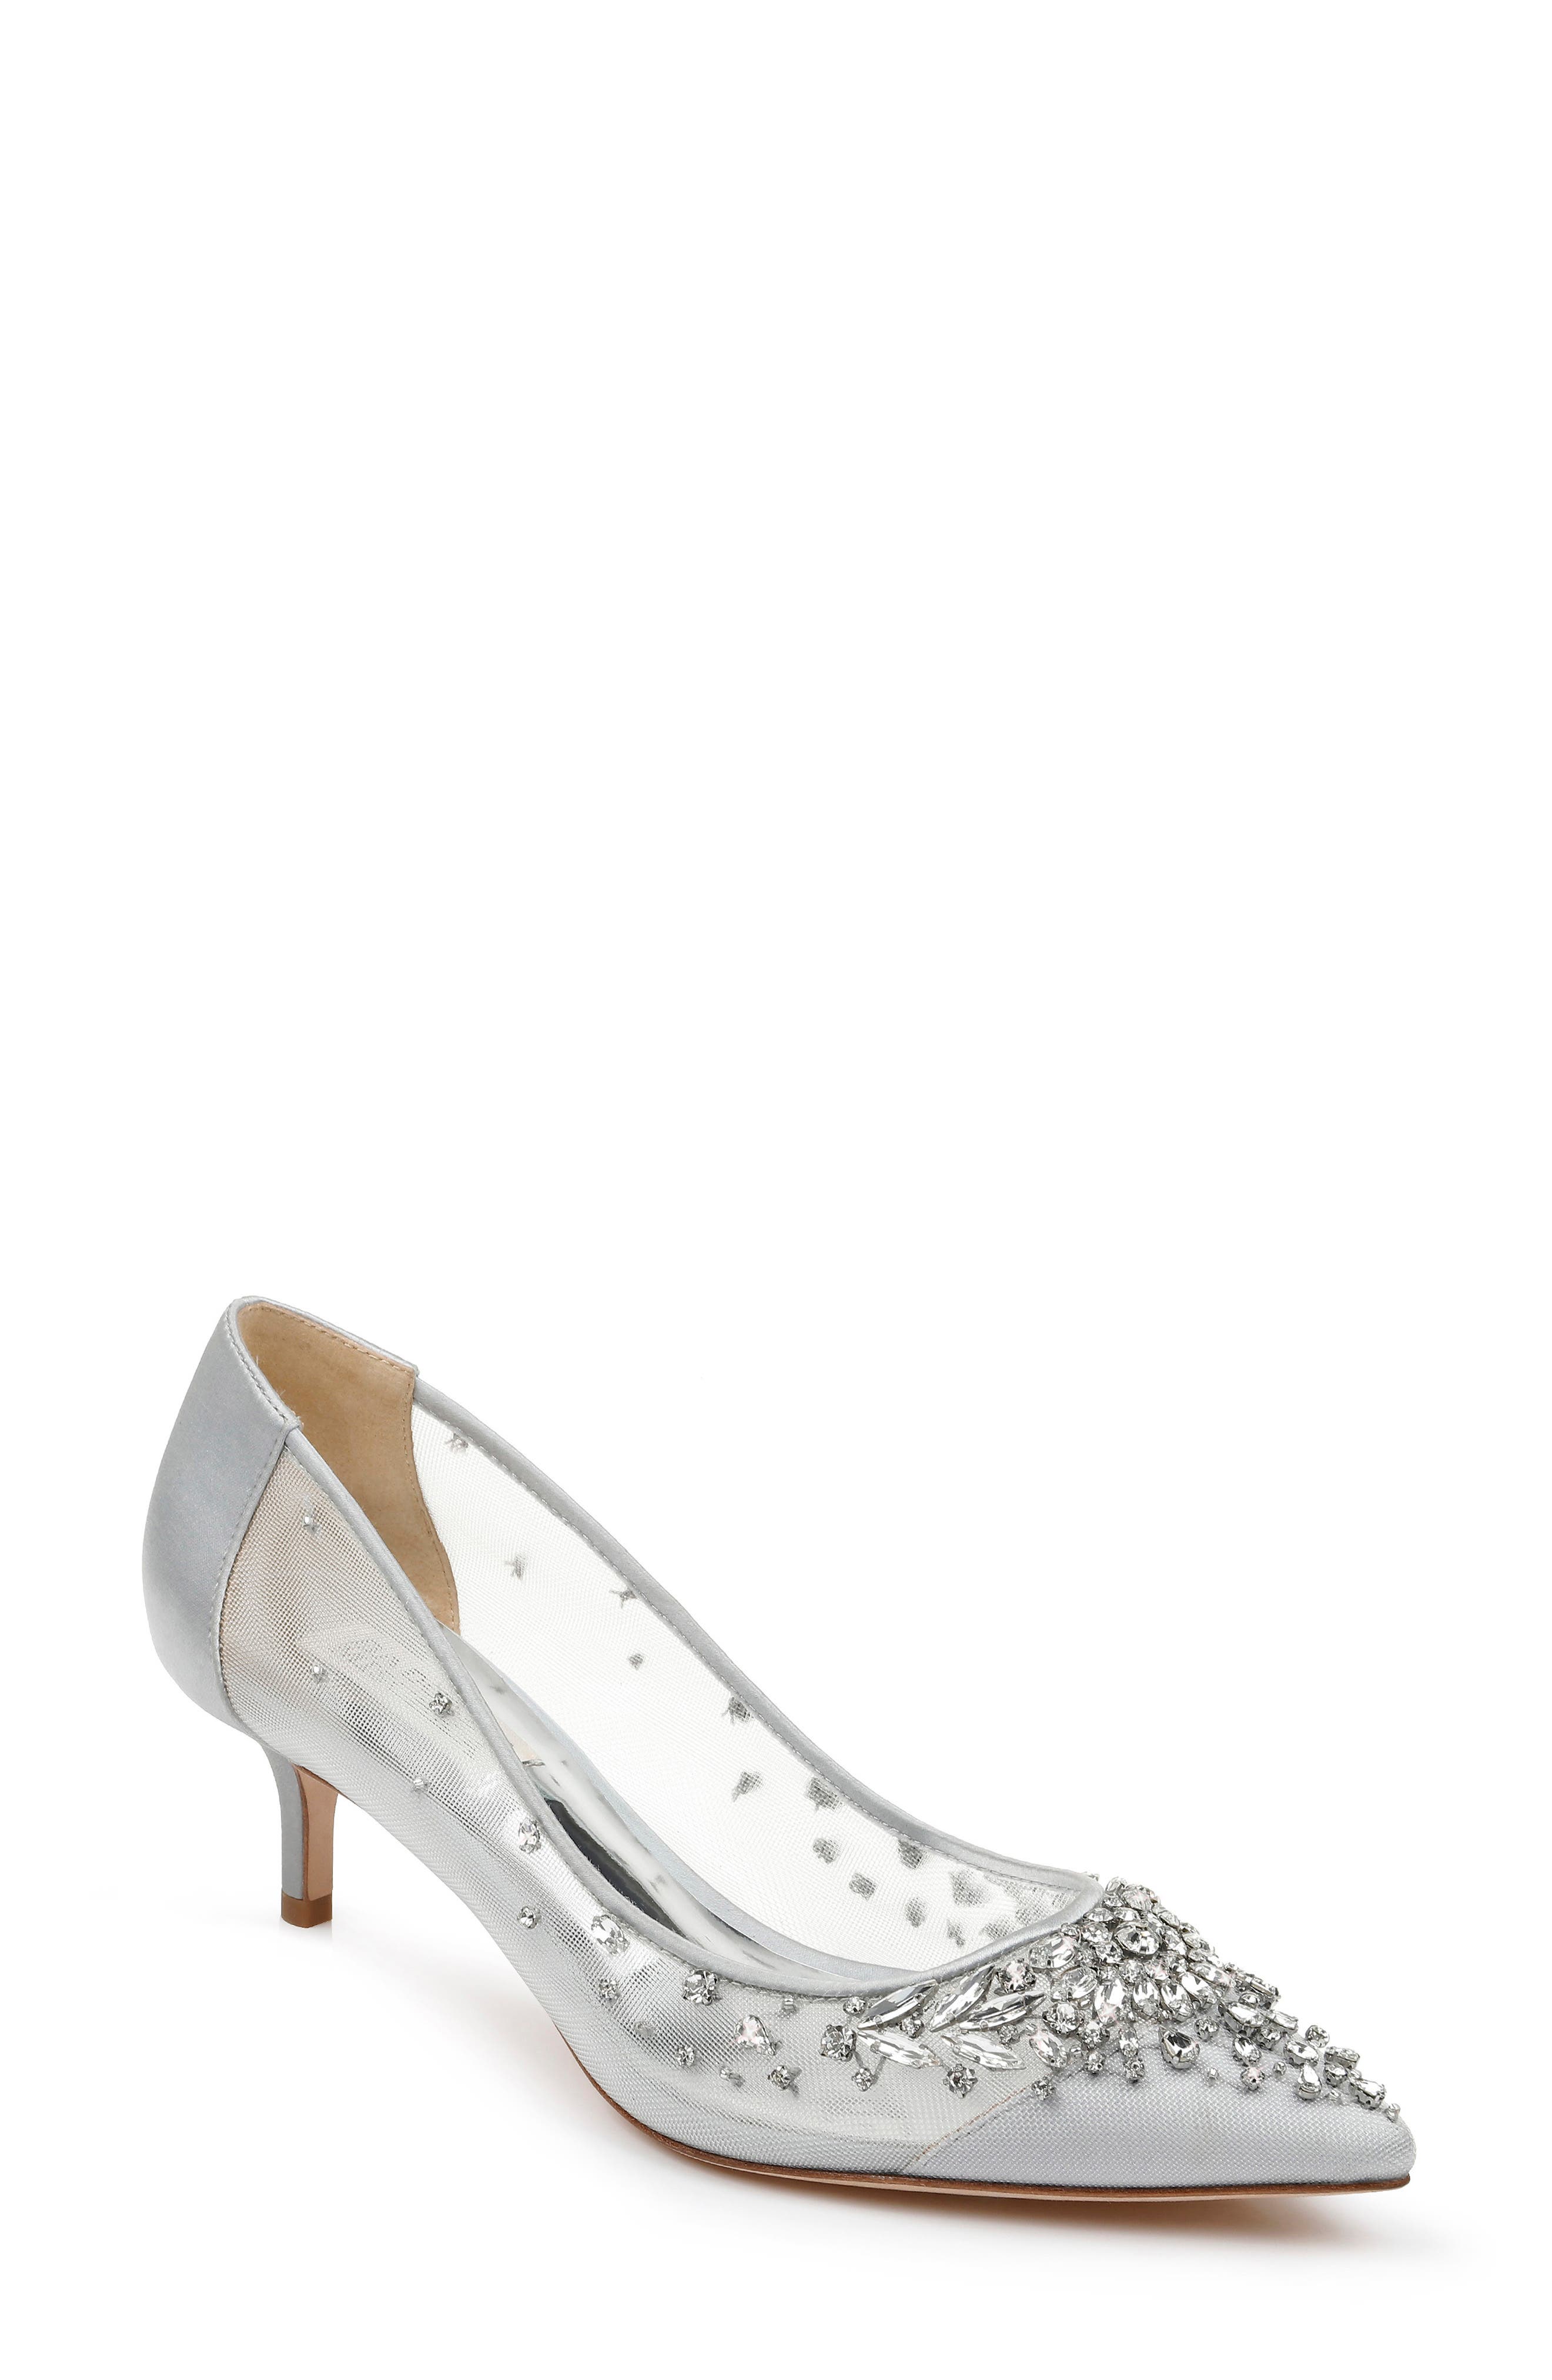 silver kitten heel evening shoes